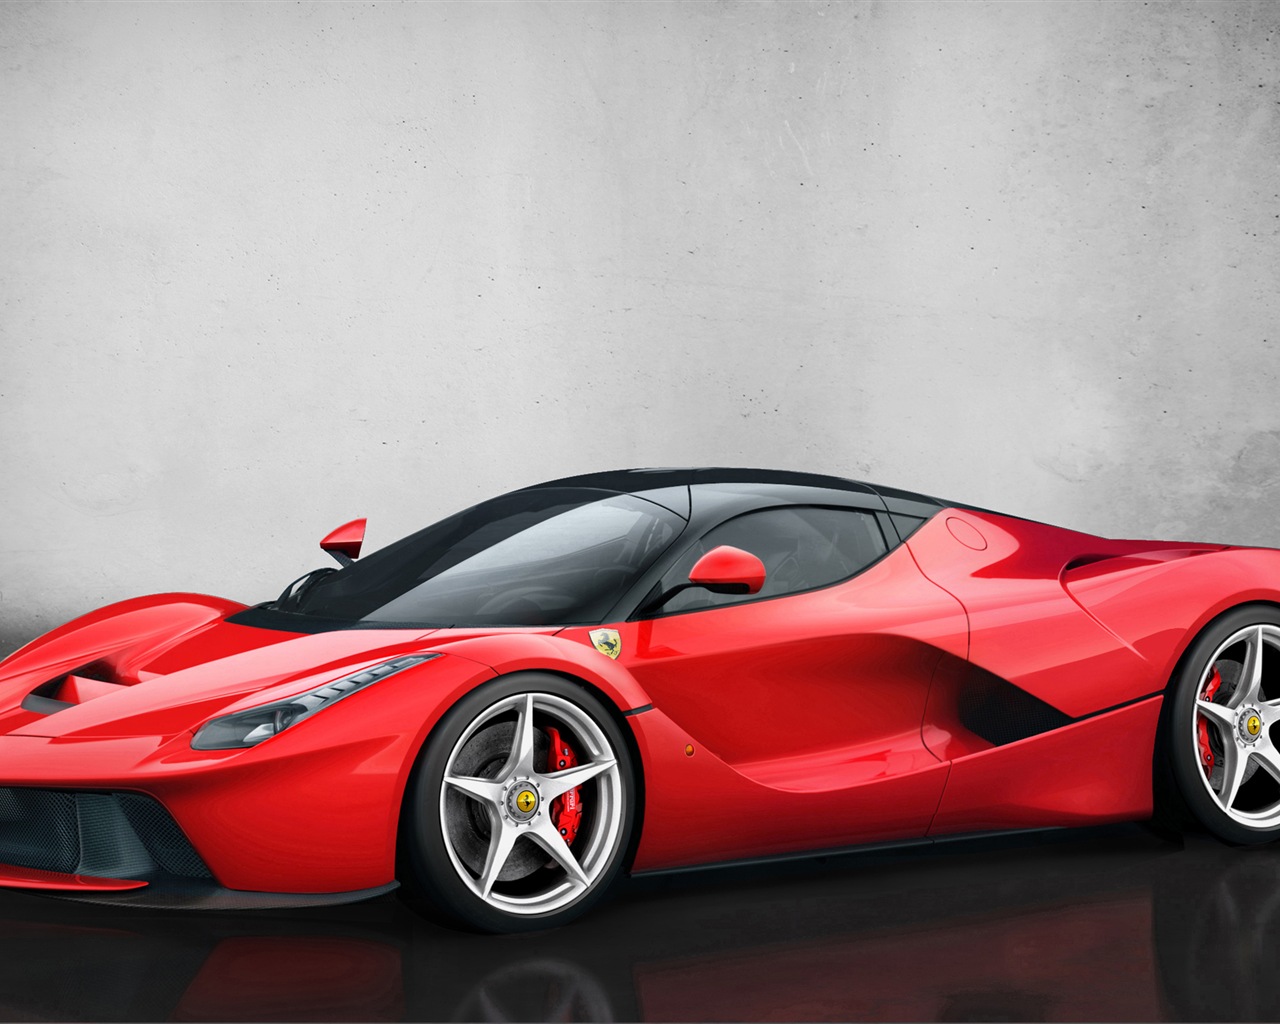 2013 Ferrari LaFerrari 法拉利LaFerrari红色超级跑车高清壁纸7 - 1280x1024